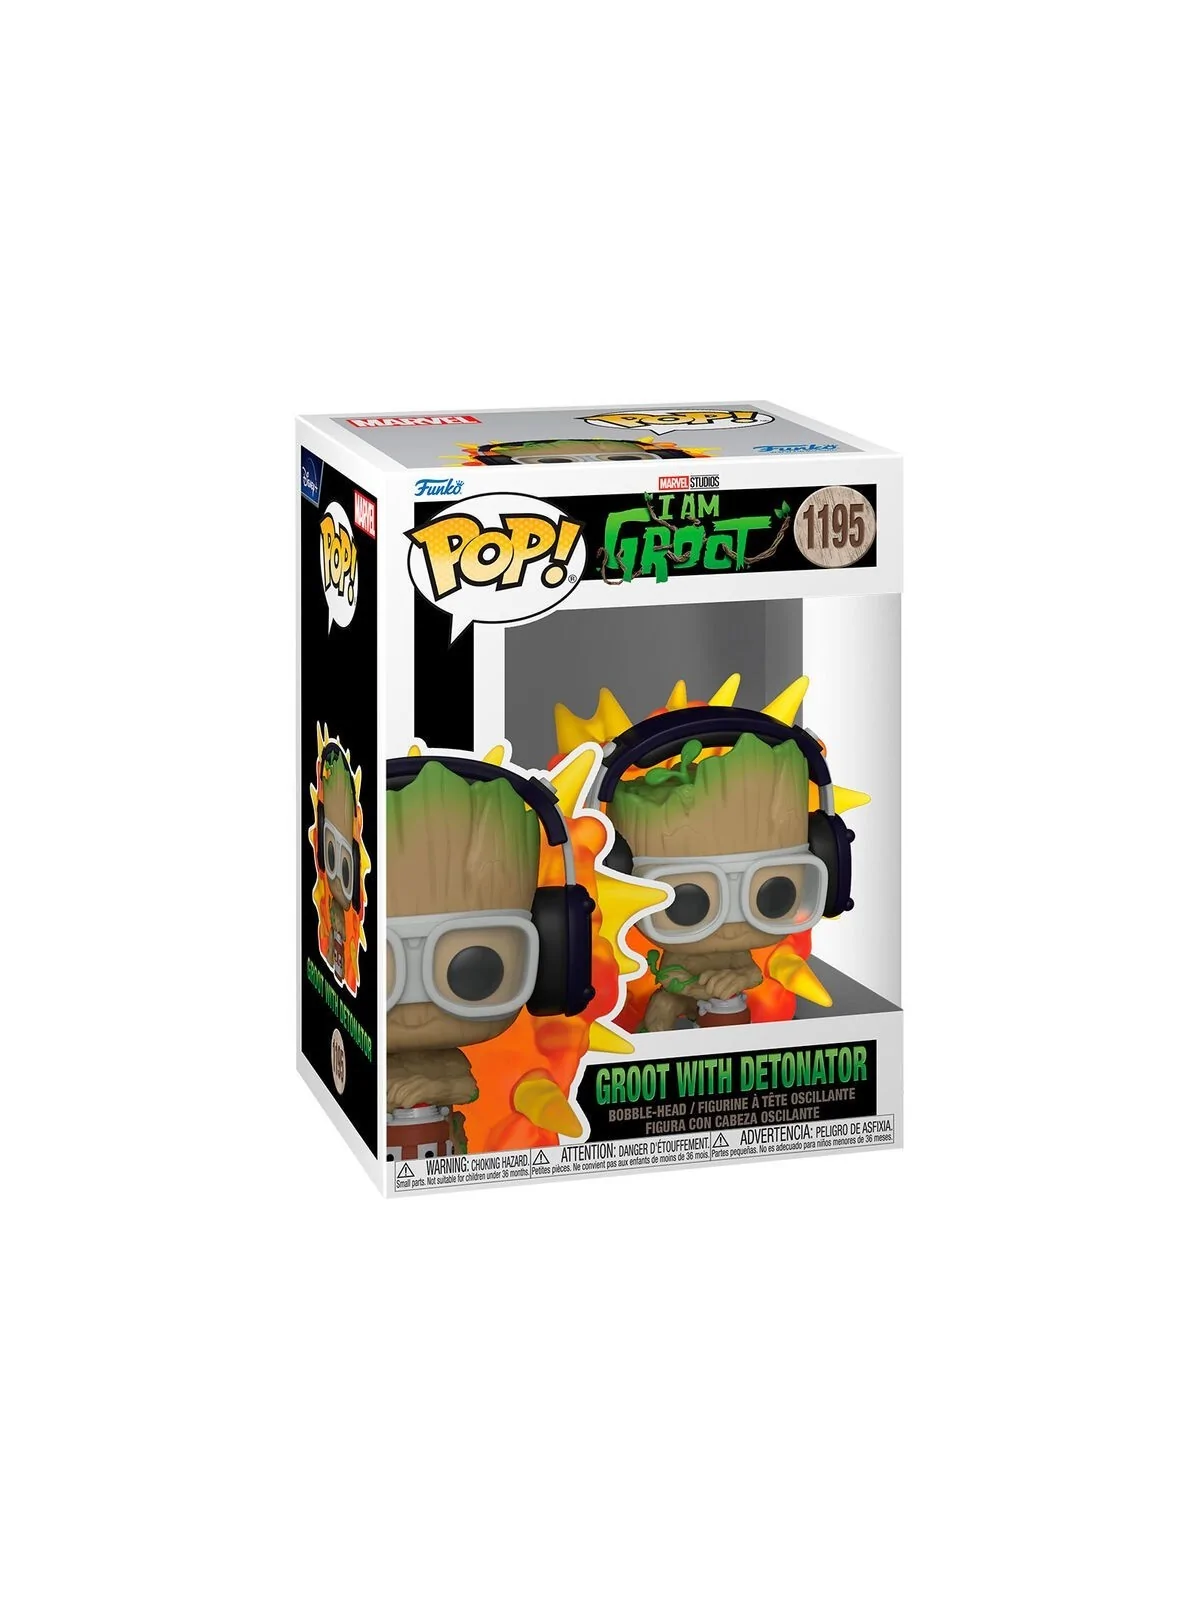 Comprar Funko POP! Marvel I am Groot: Groot with Detonator (1195) bara